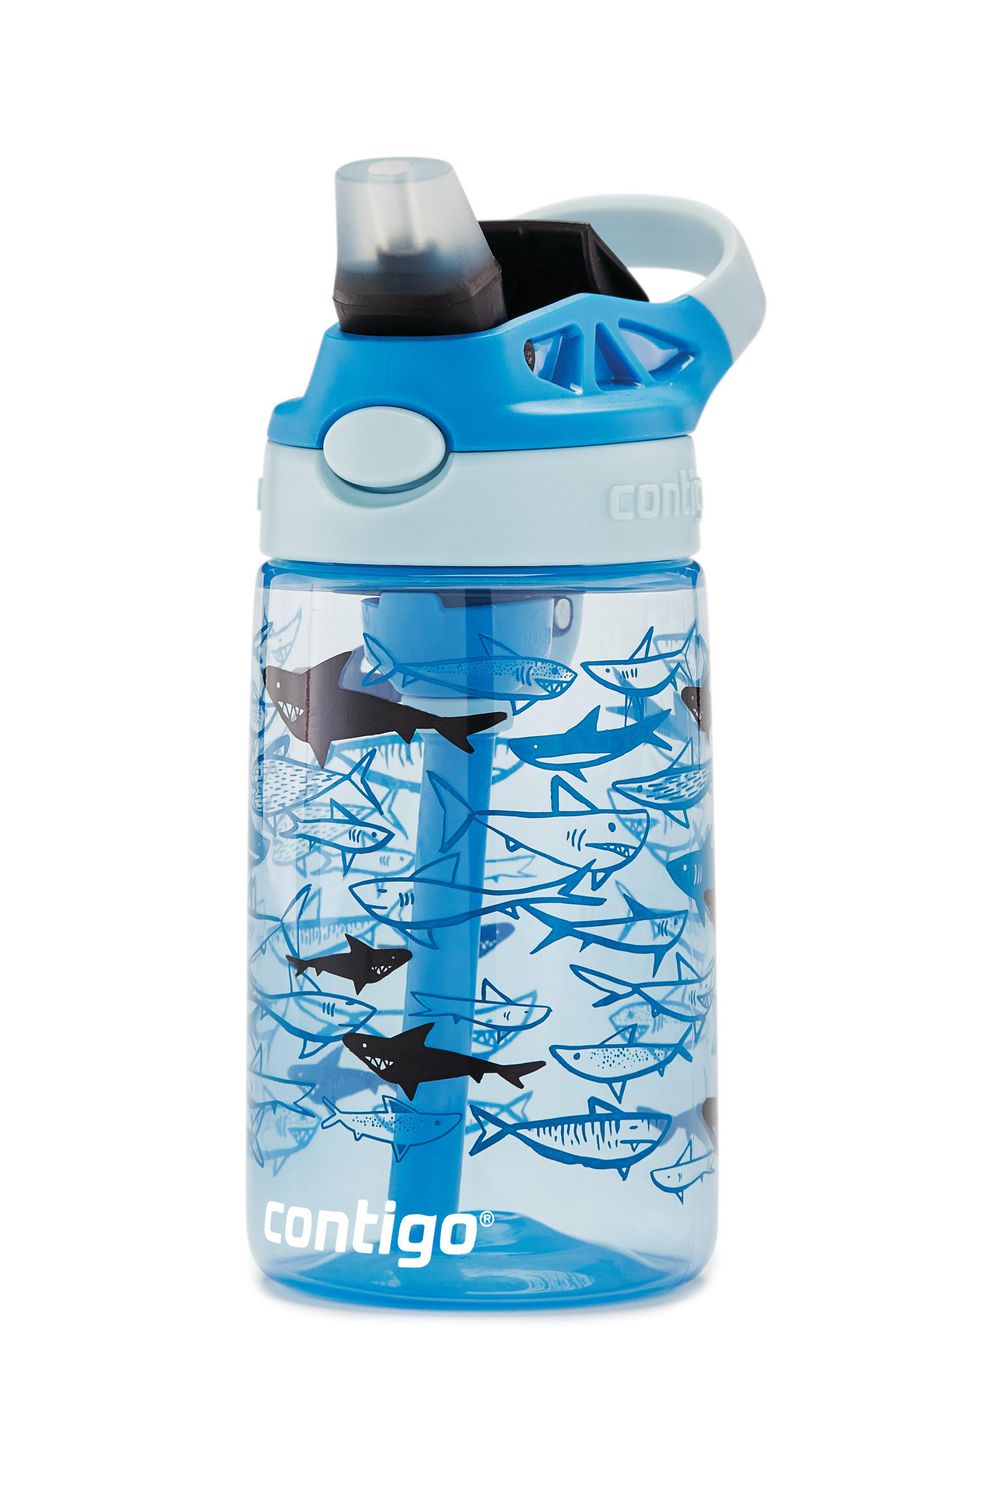 Contigo Kids Water Bottle with Redesigned AUTOSPOUT Straw, 14oz- Kitty Cat  (2)